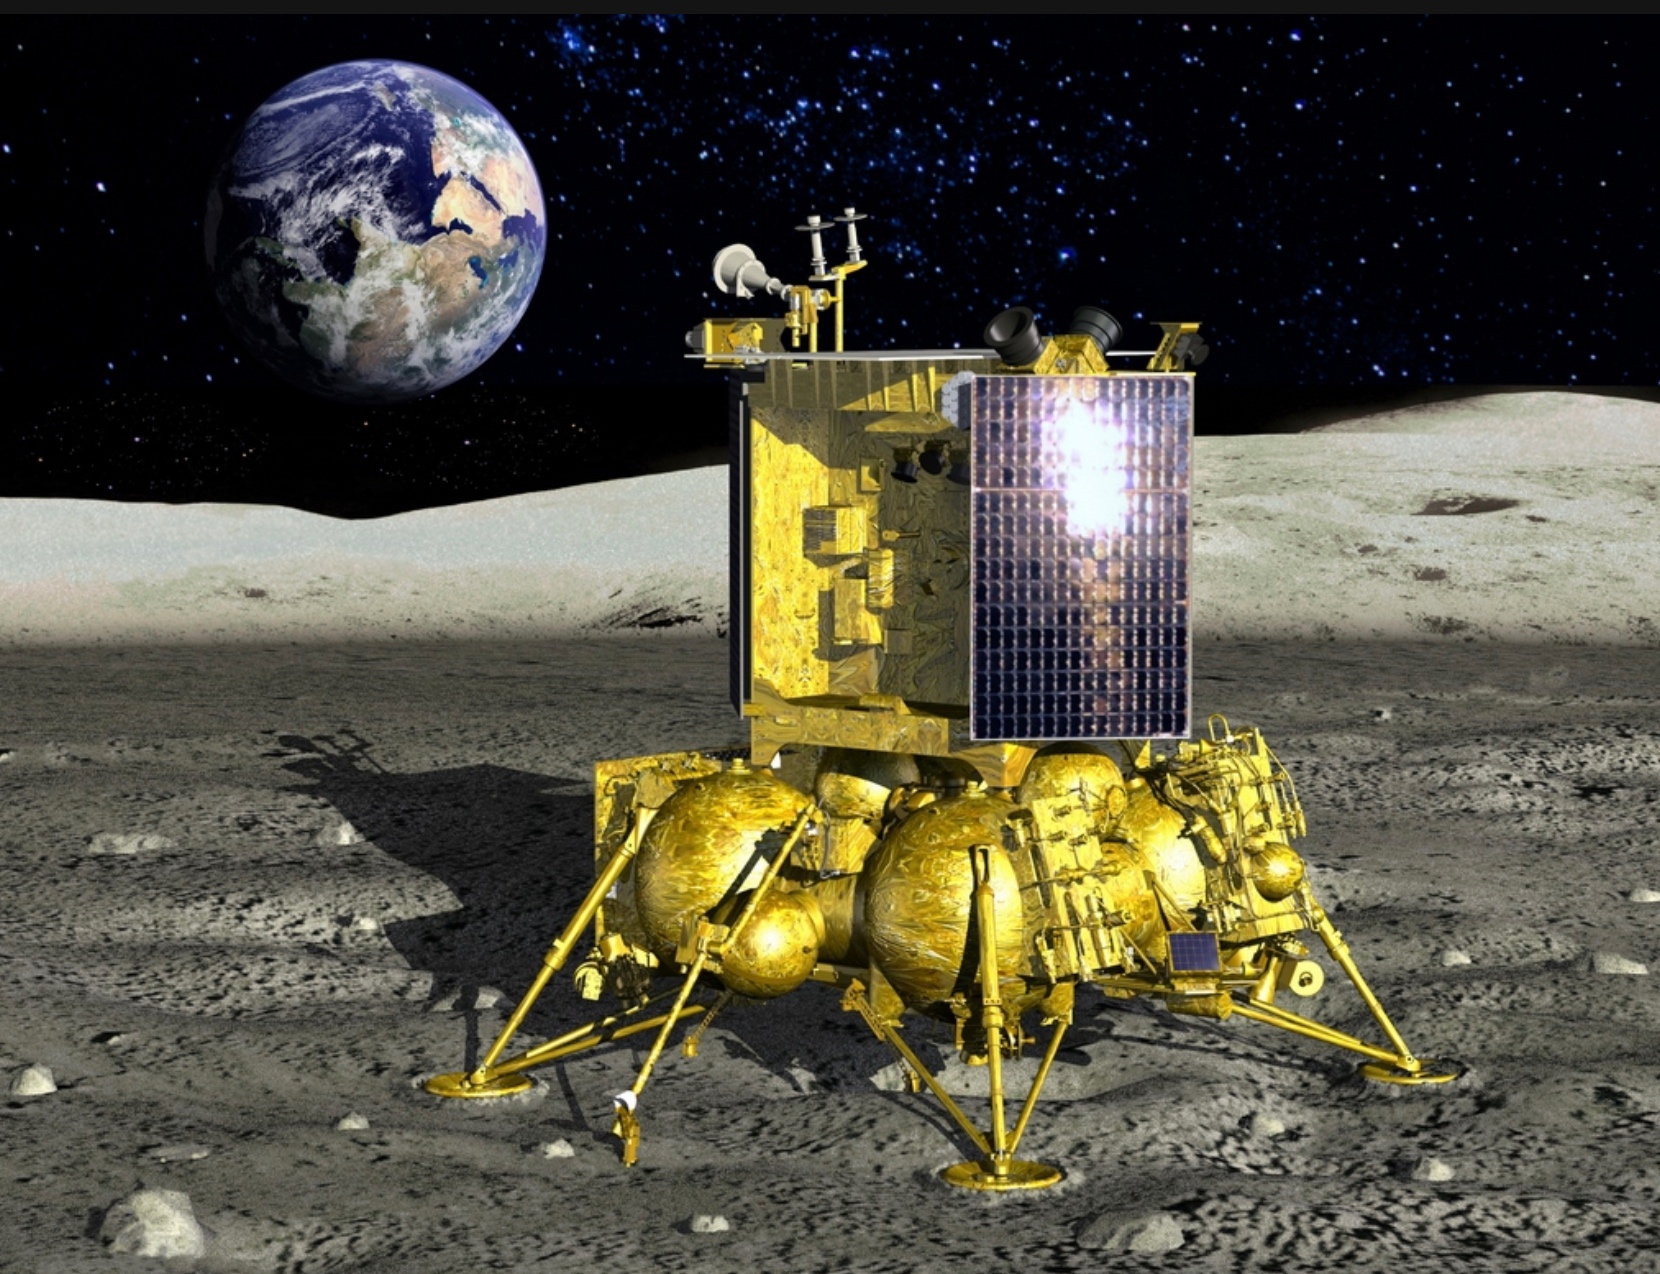 Luna-25 malfunctions during lunar orbit maneuver - SpaceNews